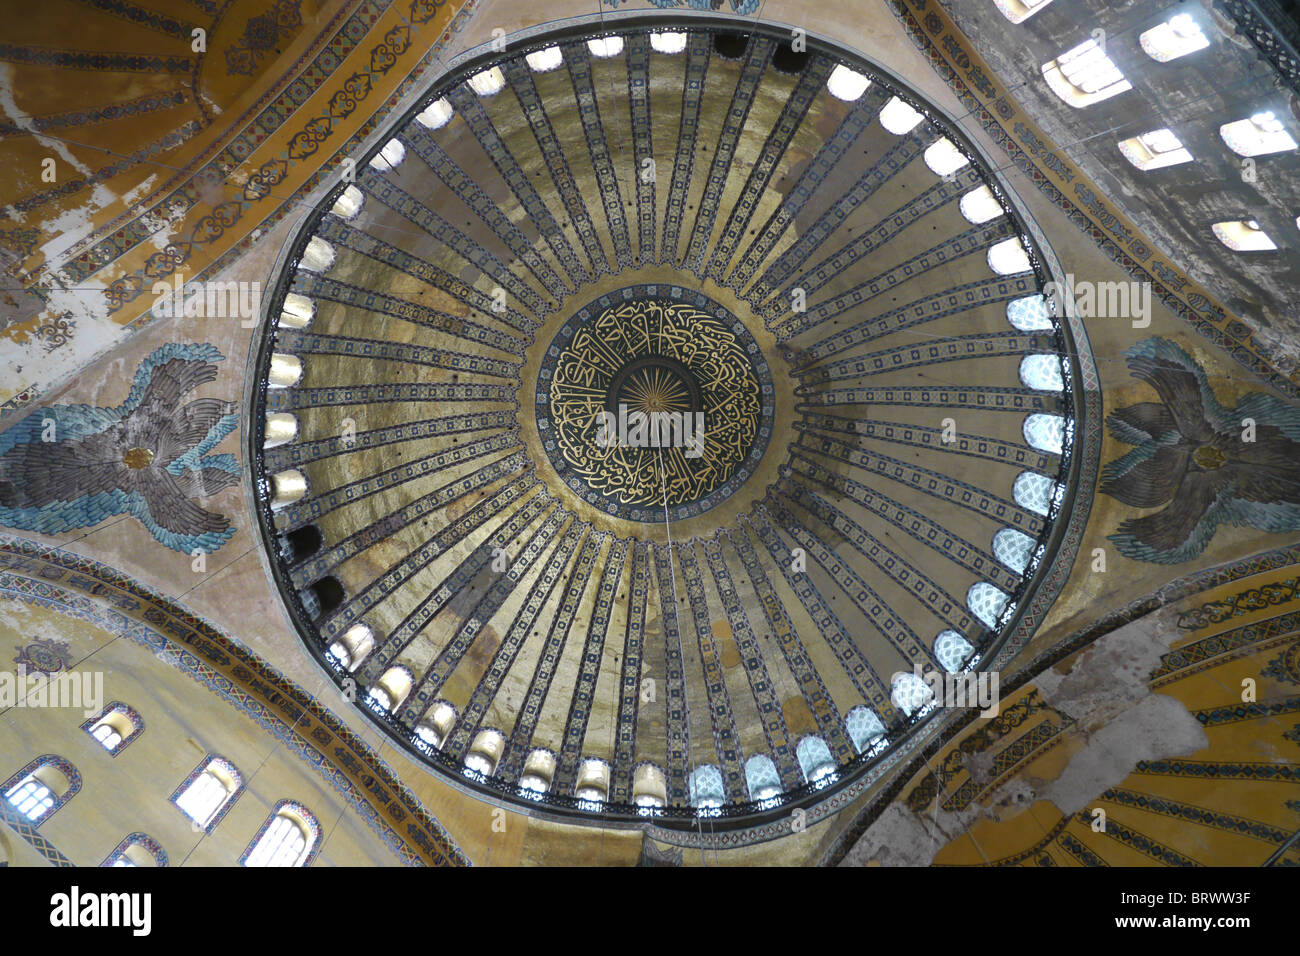 TURKEY Interior of Ayasofya Museum (Haghia Sophia). Main dome. photo by Sean Sprague Stock Photo